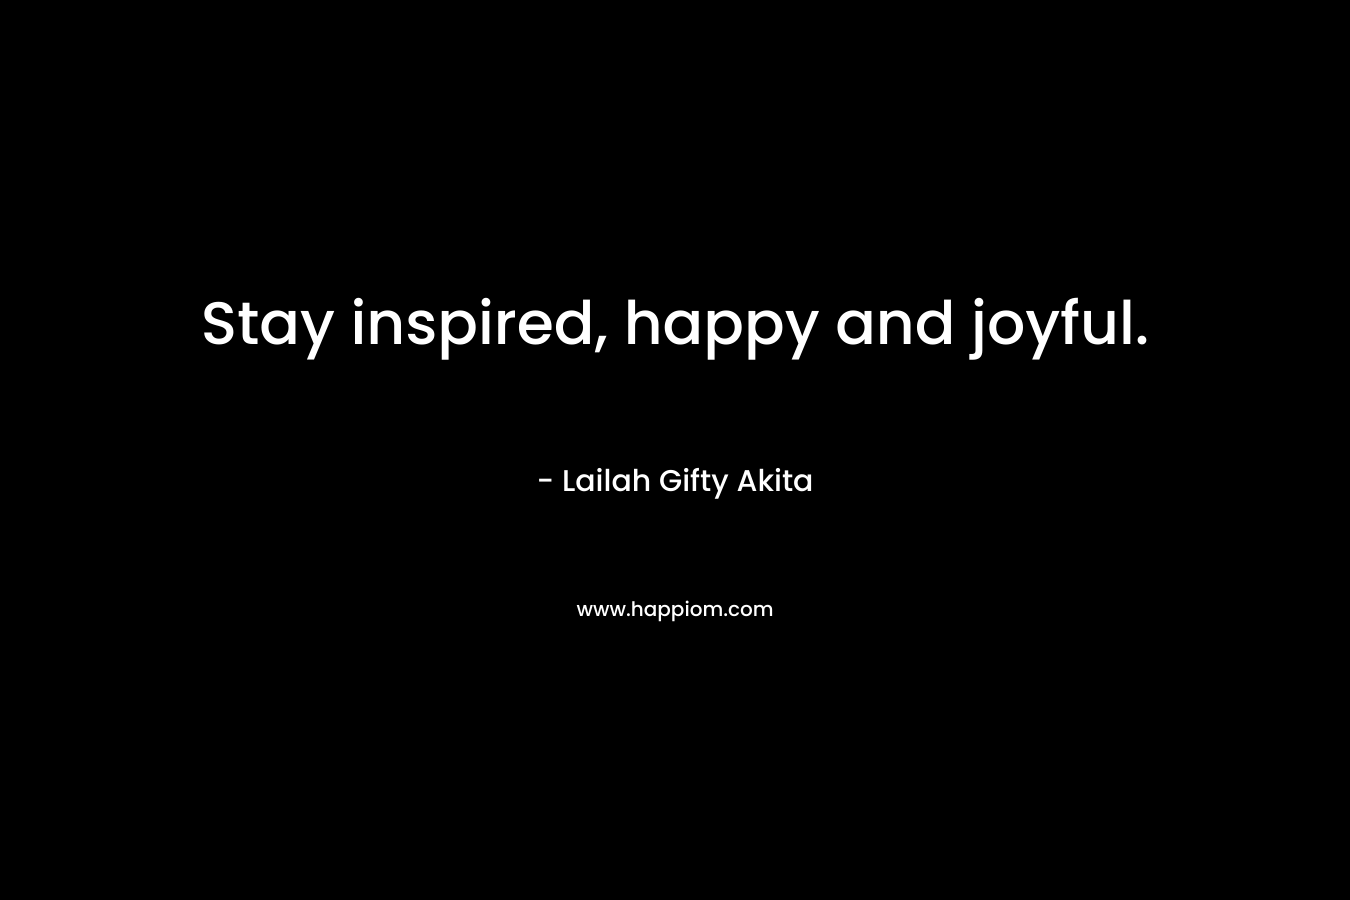 Stay inspired, happy and joyful.